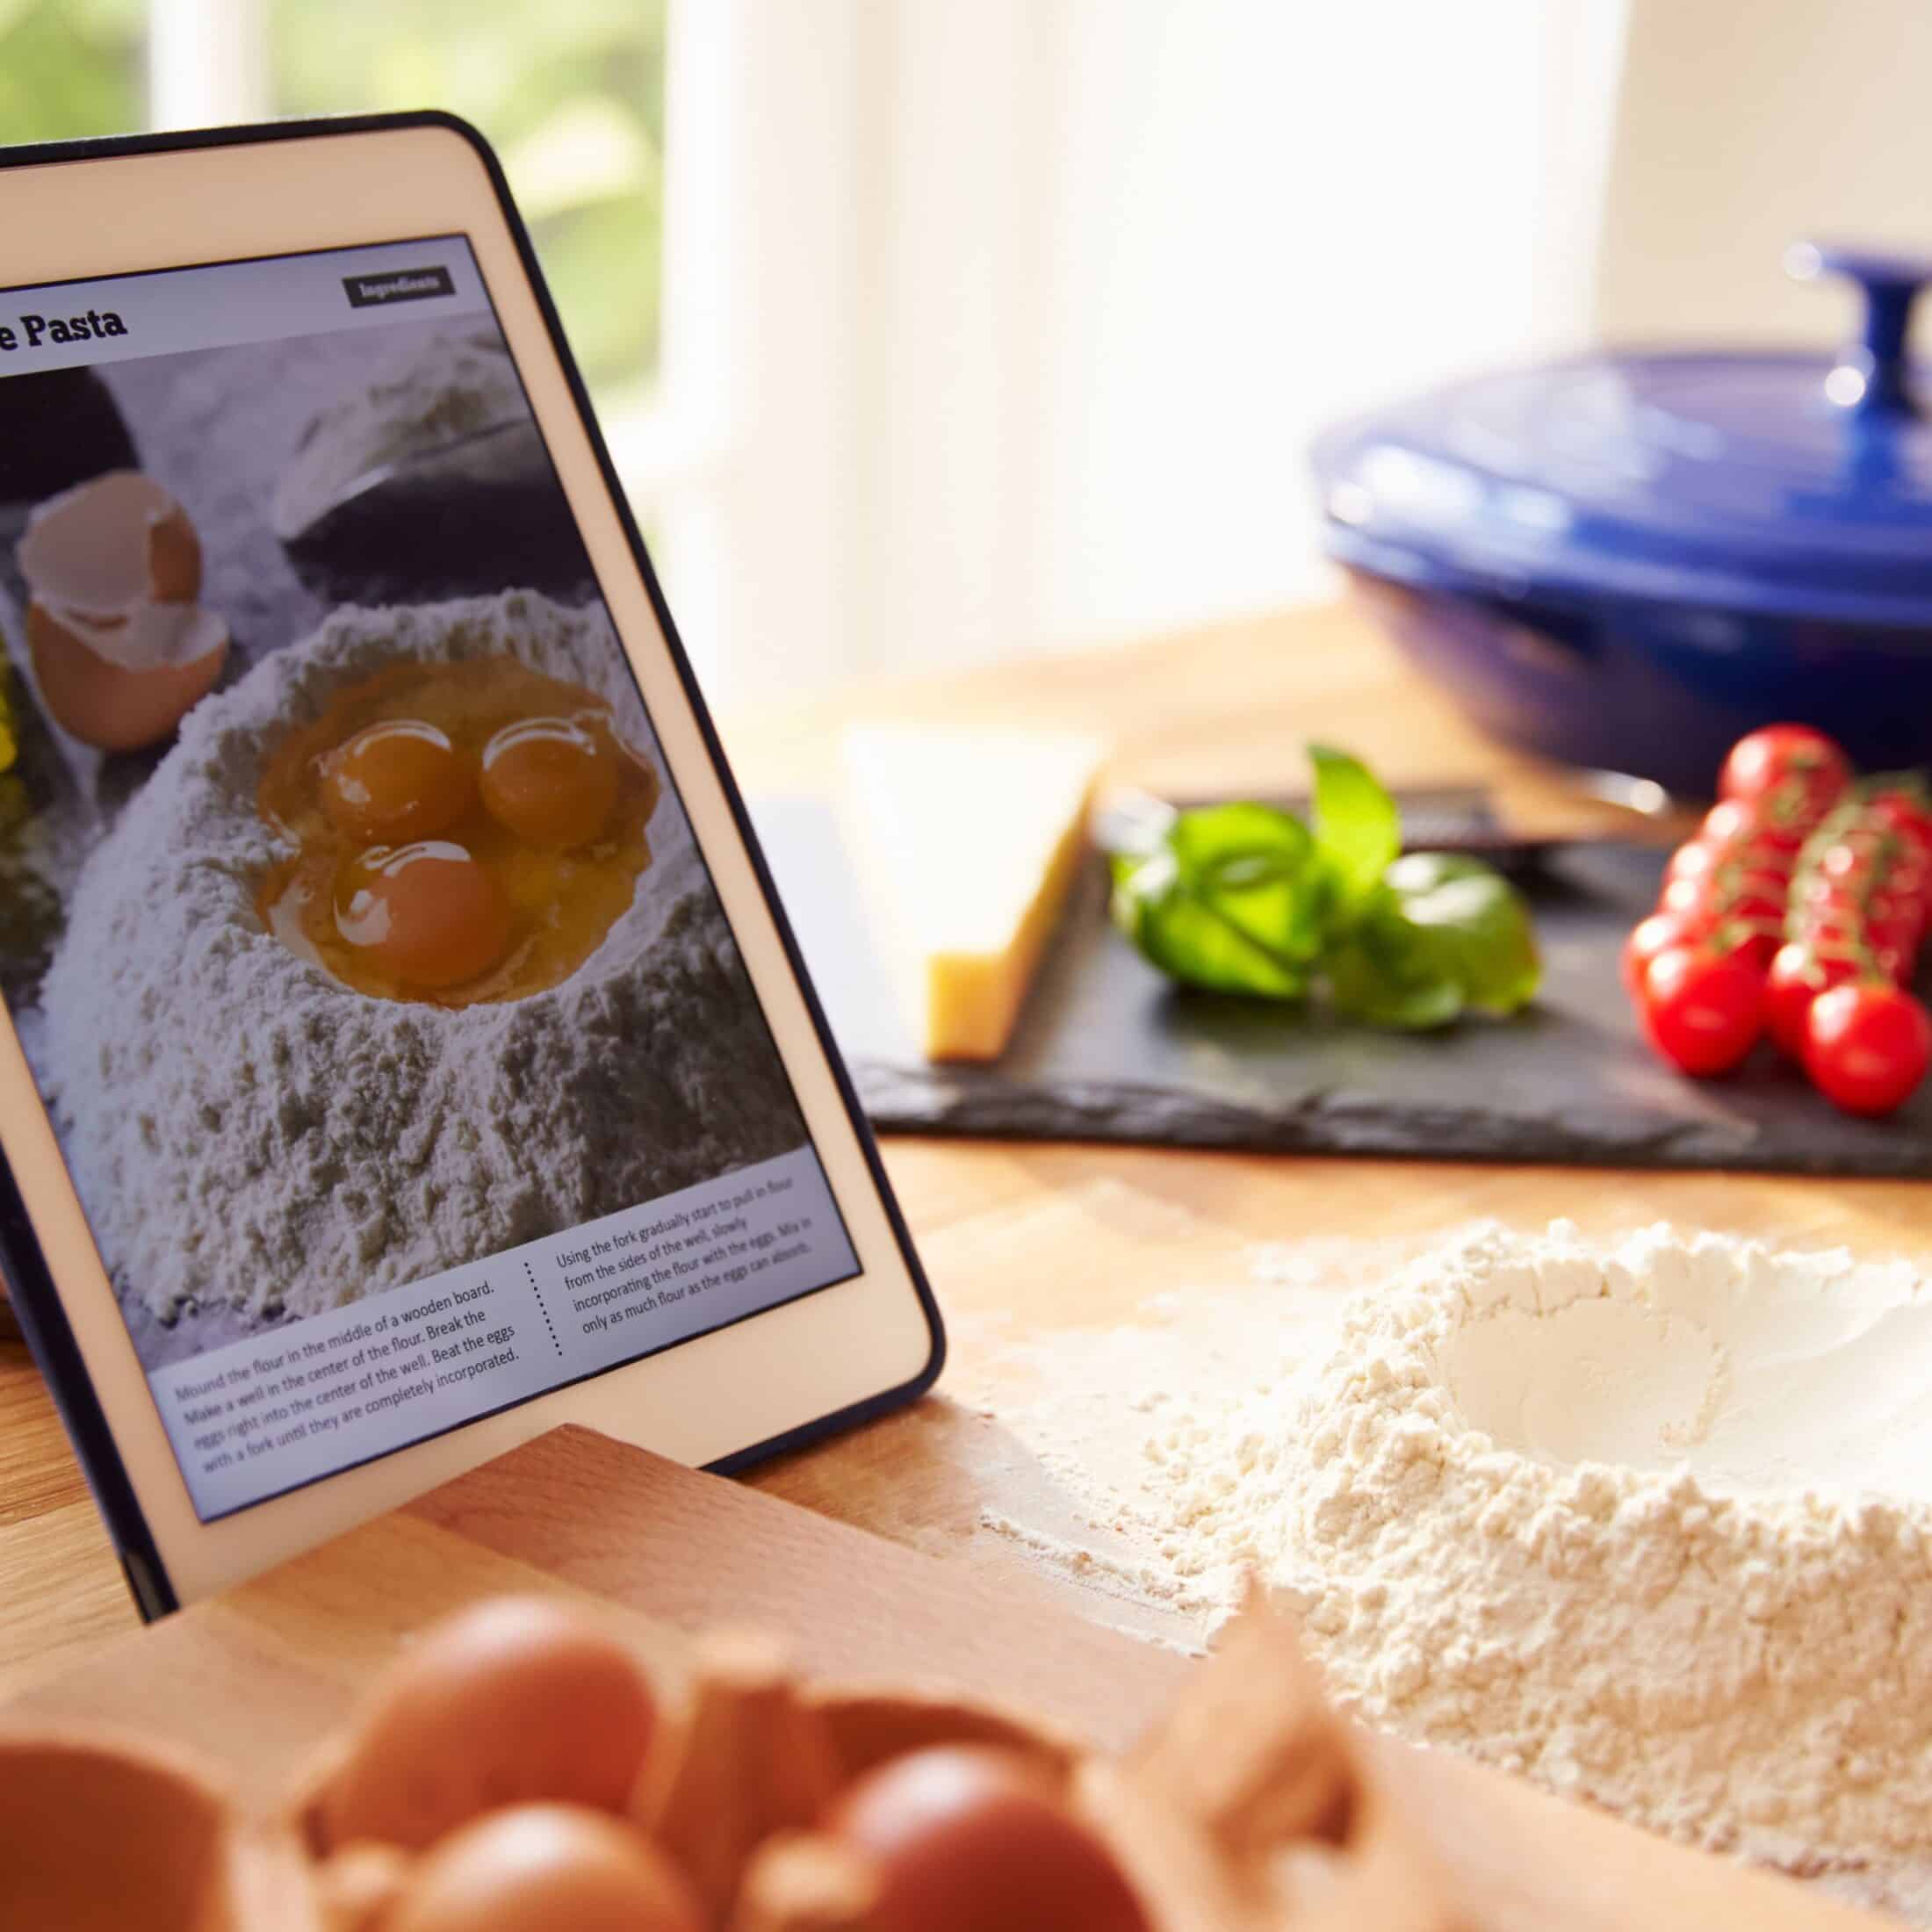 photo of ipad with digital recipes